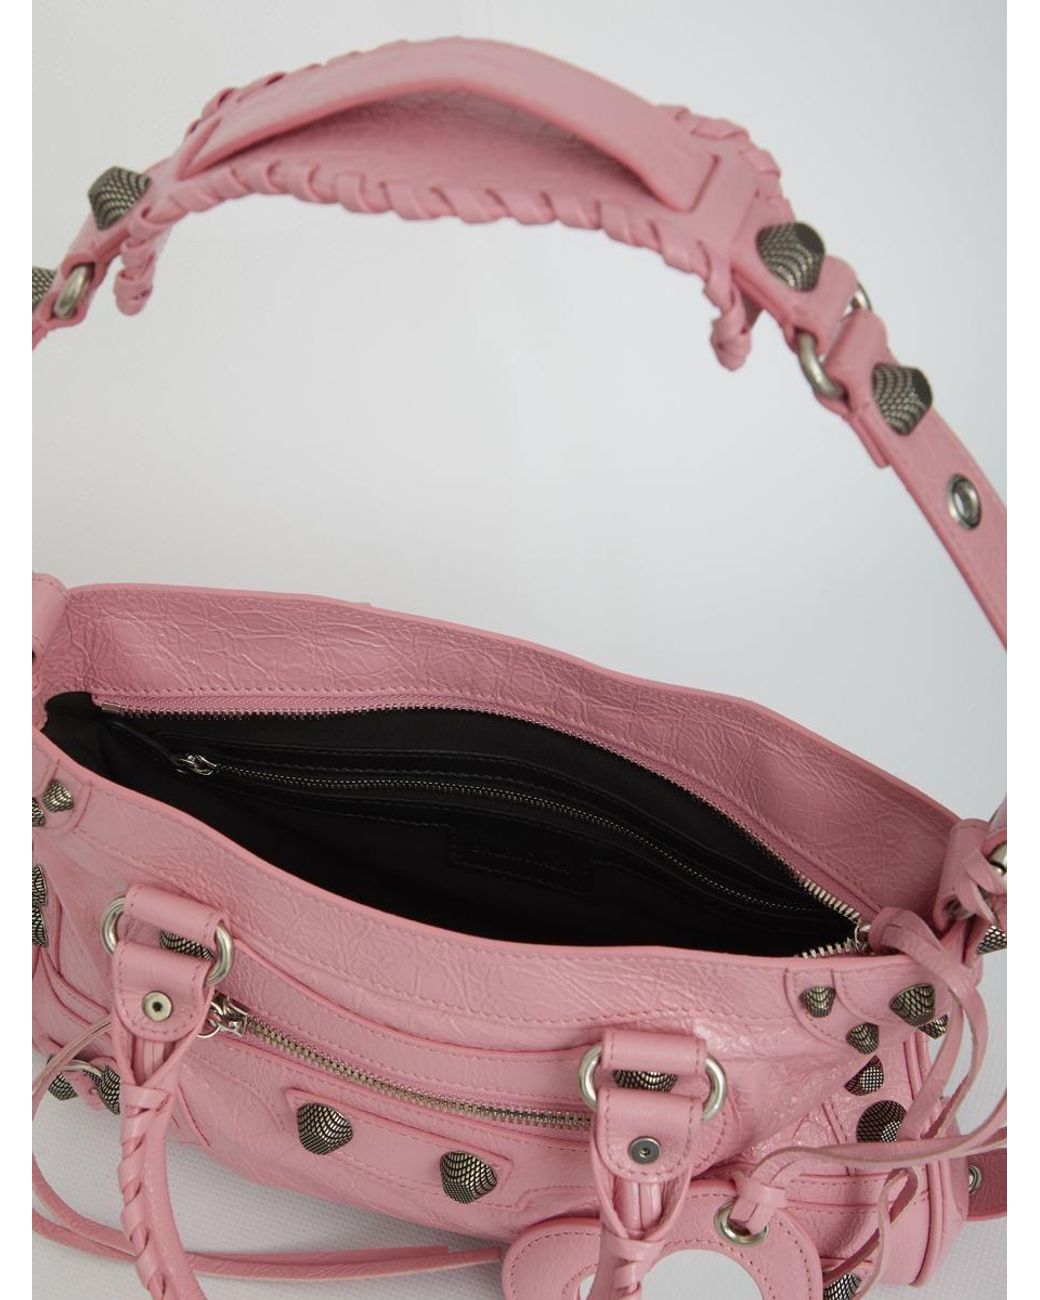 Neo Cagole Xs Crossbody - Balenciaga - Soft Pink - Leather